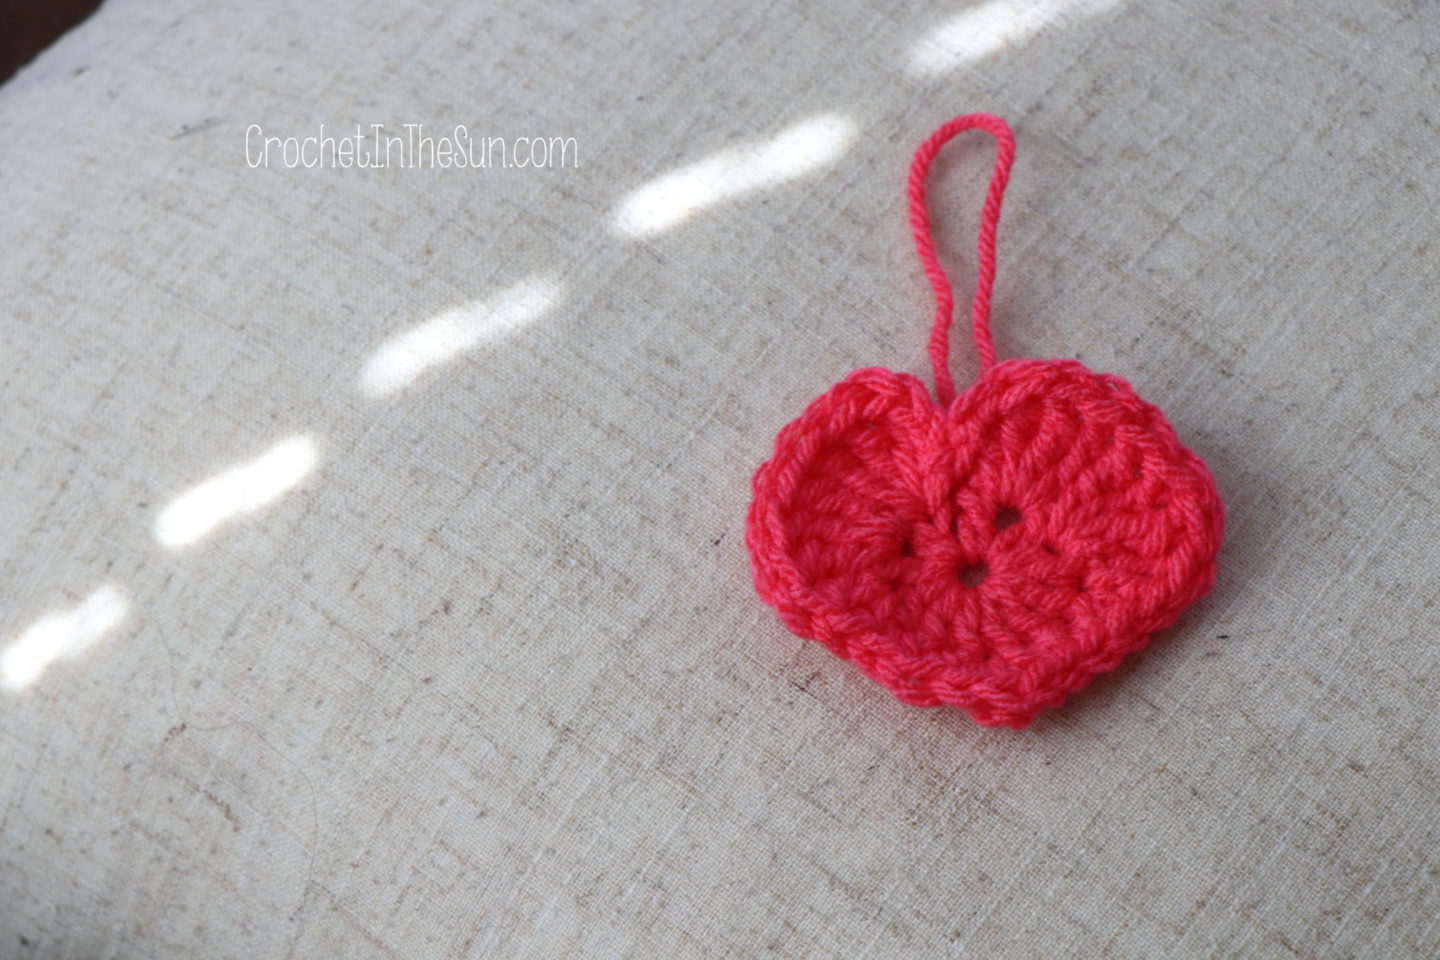 How to crochet a key chain heart.